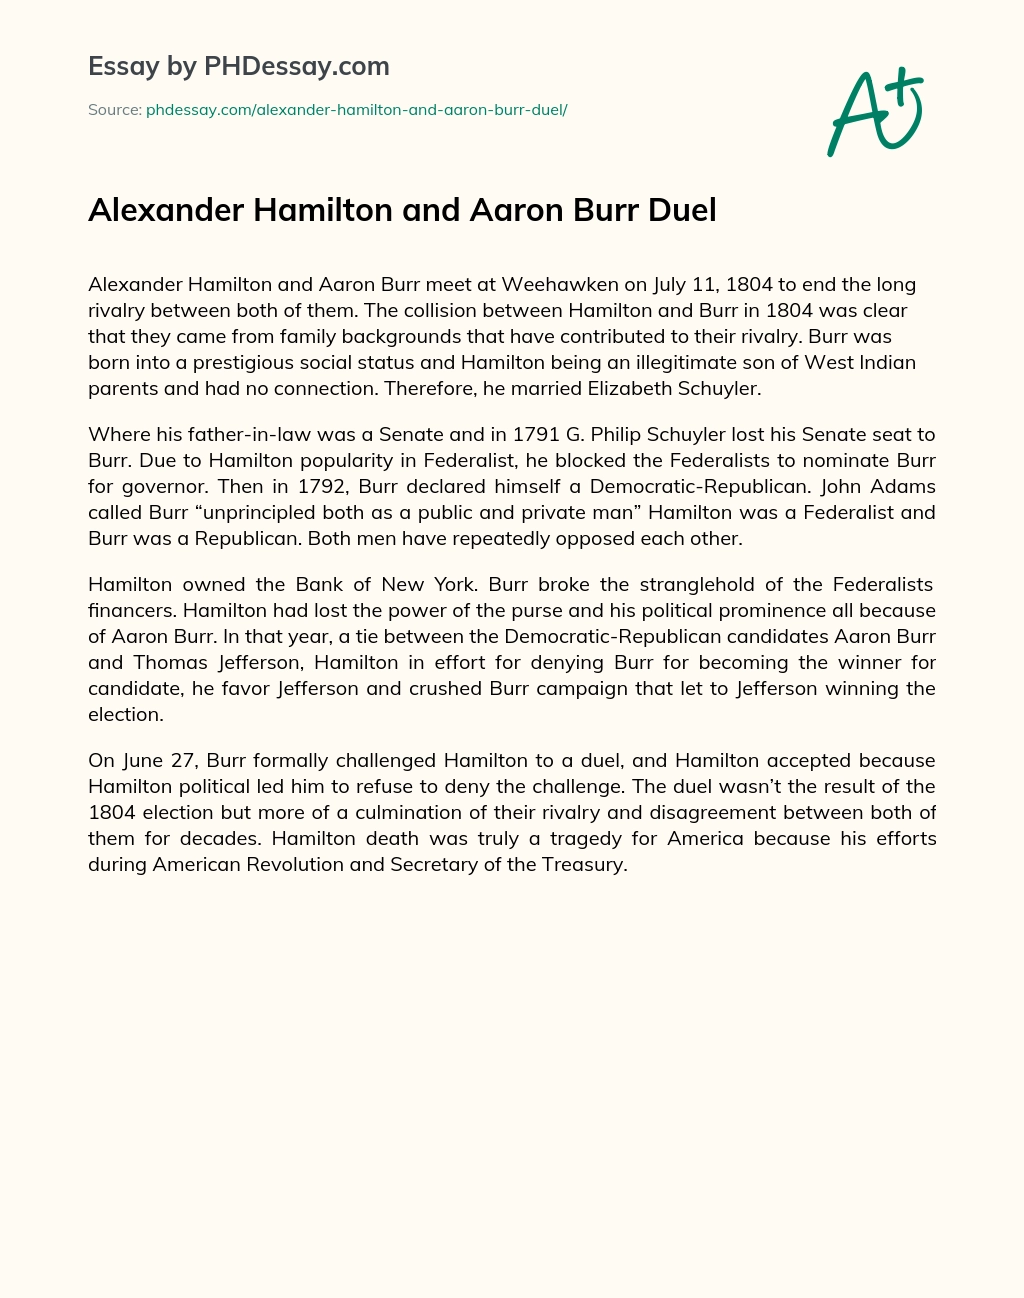 Alexander Hamilton and Aaron Burr Duel essay